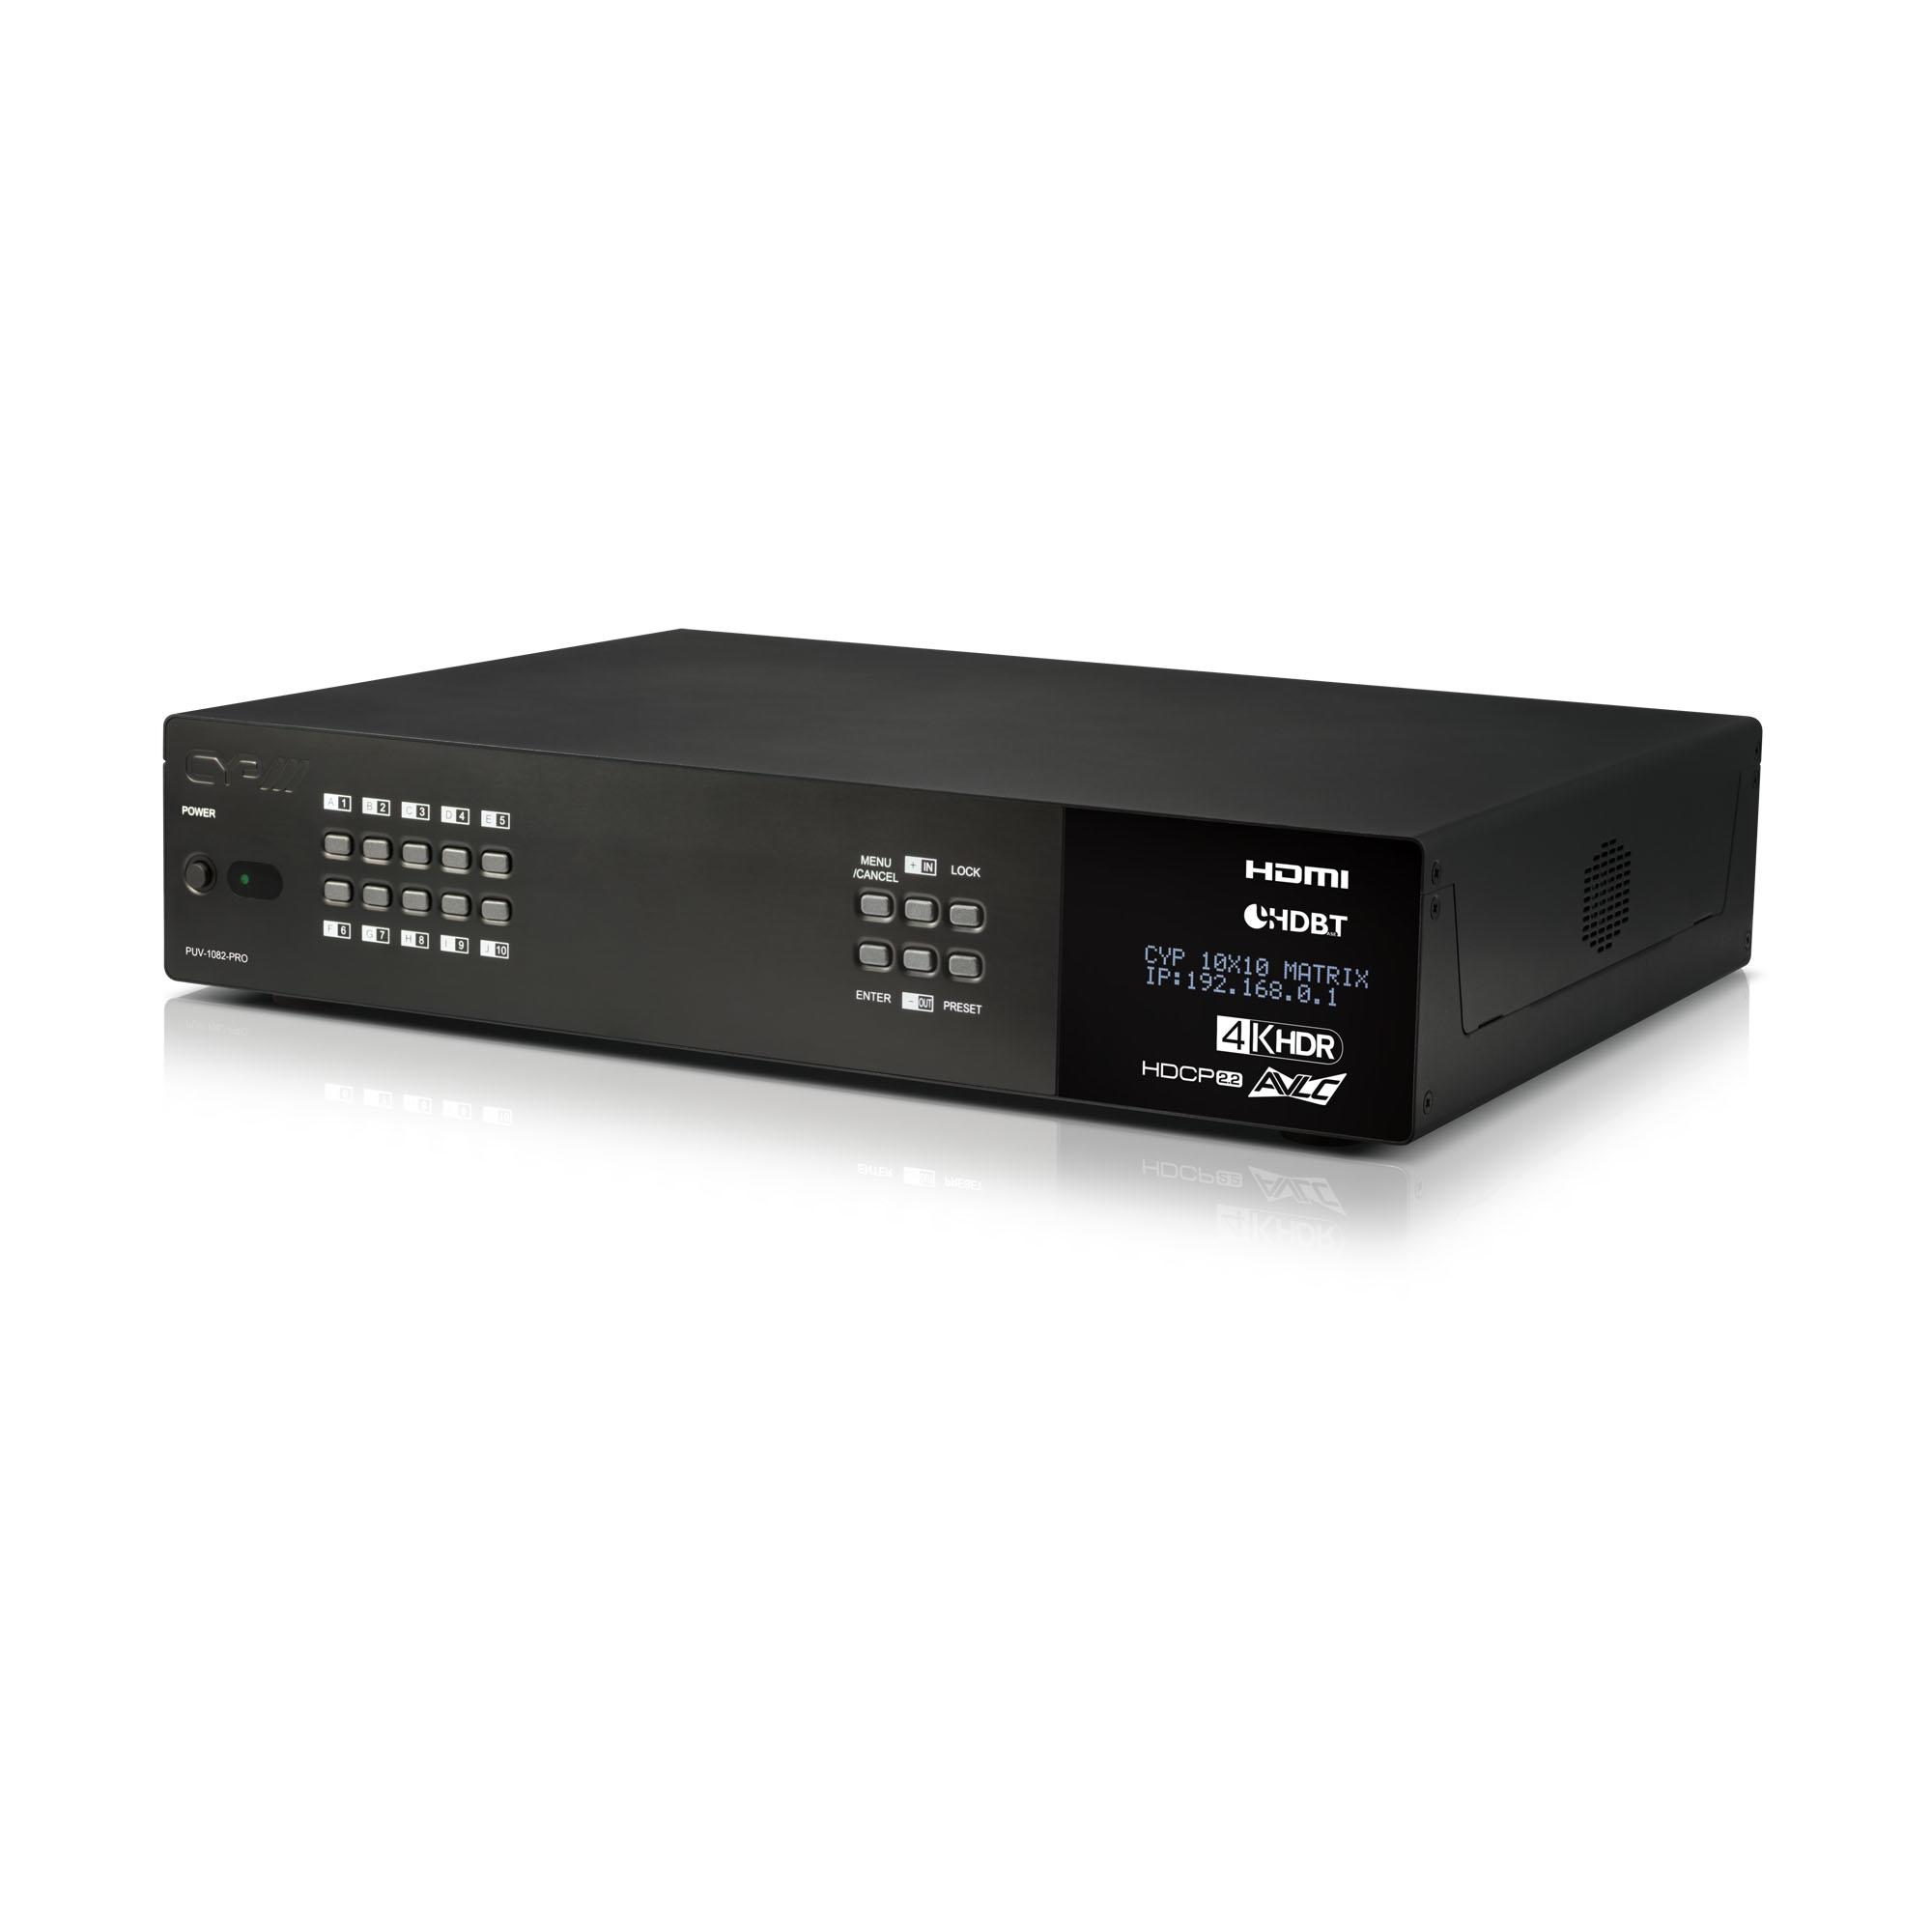 PUV-1082-PRO 10 x 10 HDMI HDBaseT™ Matrix with Audio Matricing Independent Scaling, AVLC (4K, HDCP2.2, HDMI2.0, PoH, LAN, OAR, 100m)